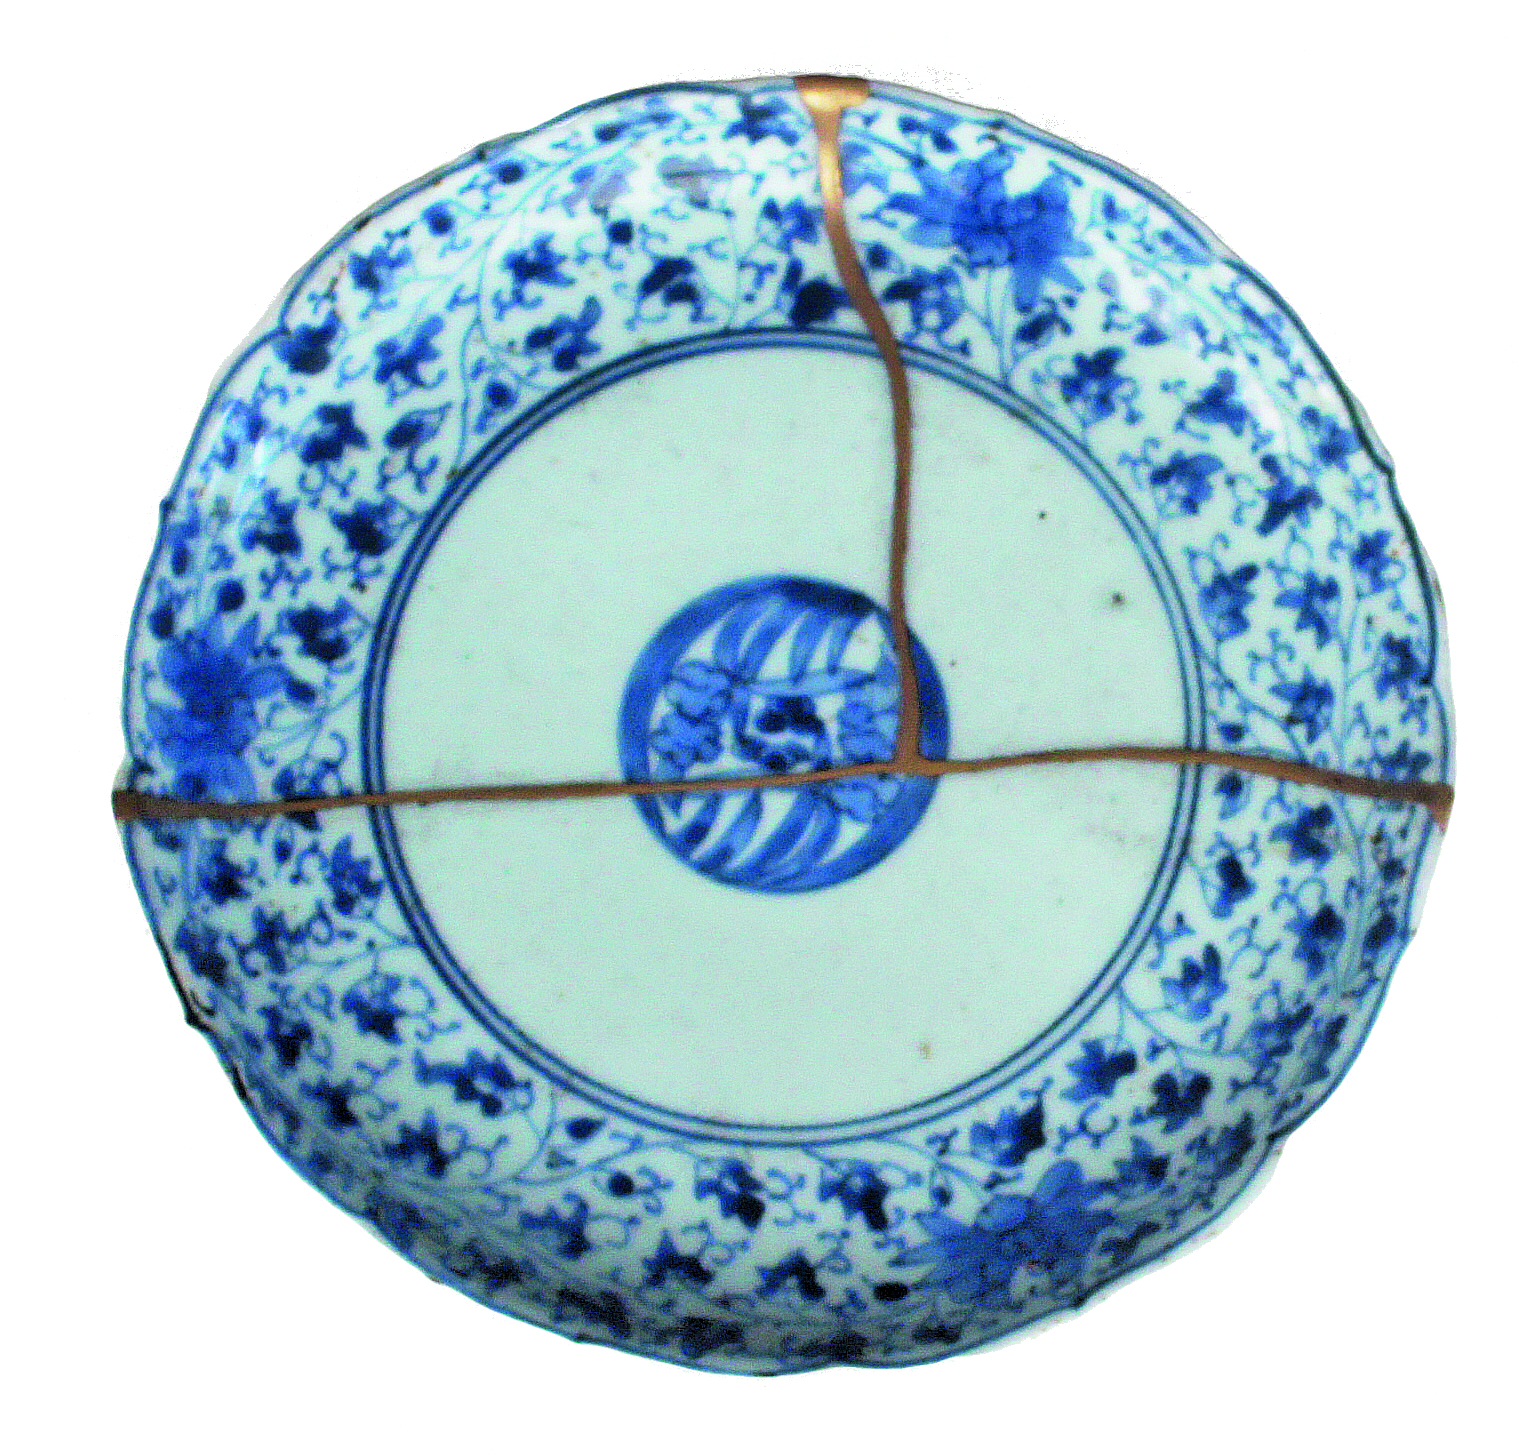 2022-058 Kintsugi blue and white Plate Old imari